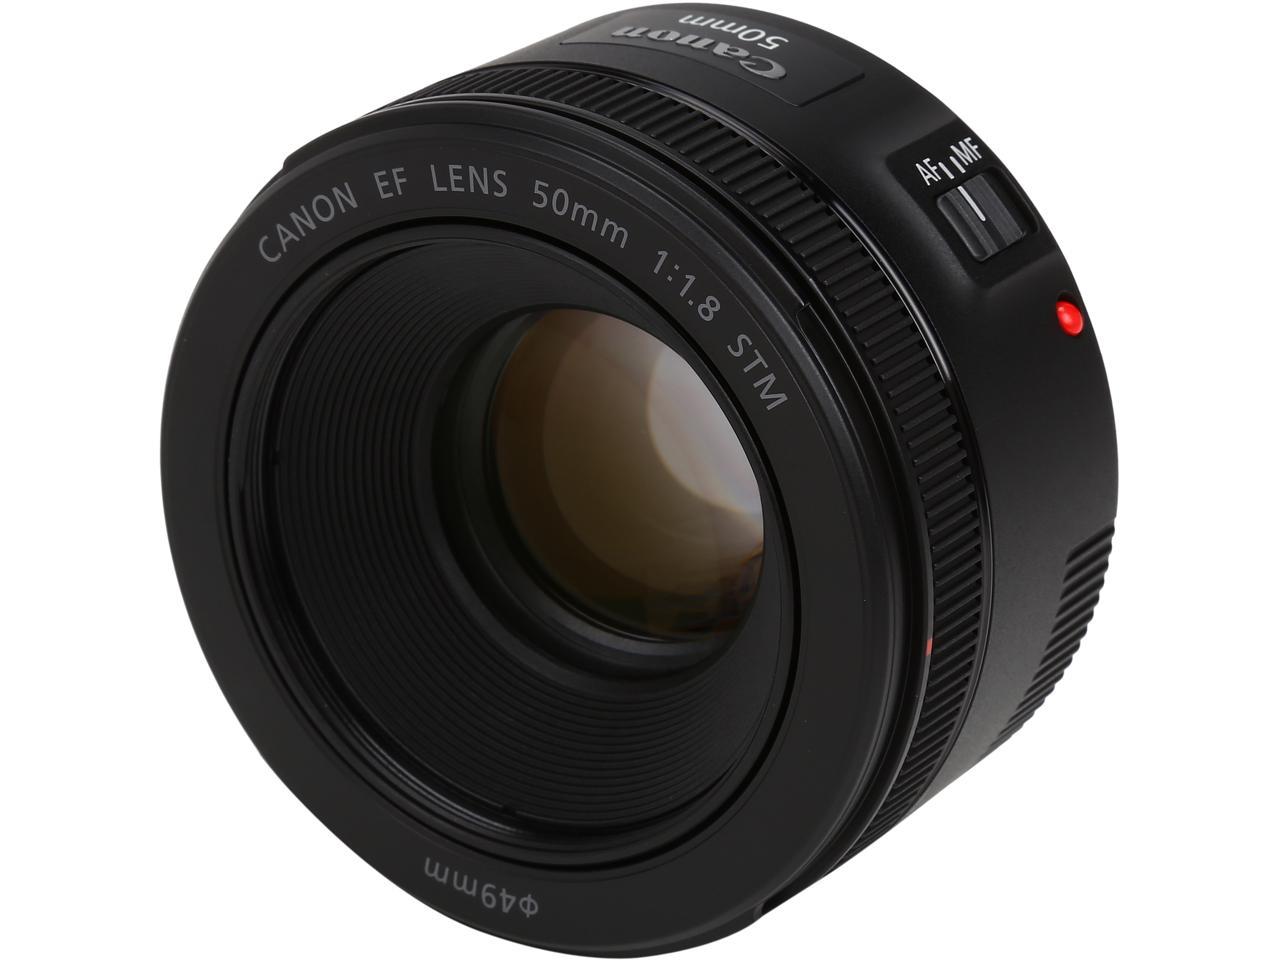 Canon m50 объективы. Canon EF Lens 50mm 1:1.8 STM. Canon EF 50mm f/1.8 STM Canon. Canon 50mm 1.8 STM. Canon 50 1.8.